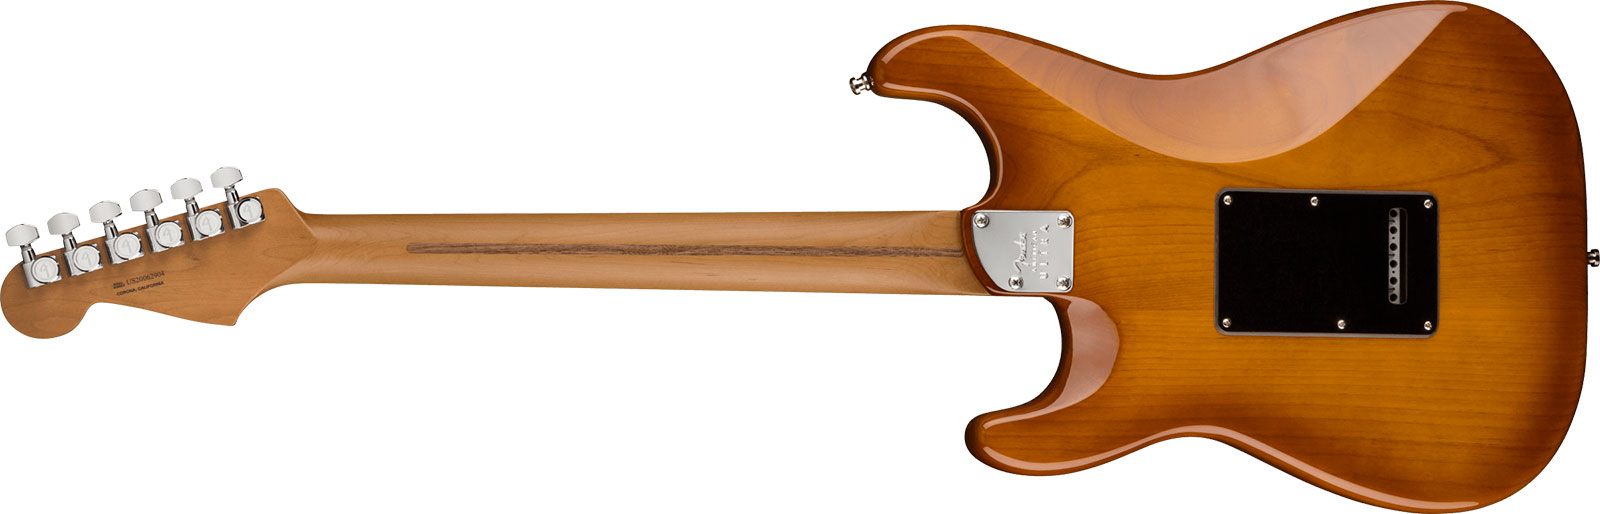 Fender Strat American Ultra Roasted Fretboard Ltd Usa 3s Trem Mn - Honey Burst - Elektrische gitaar in Str-vorm - Variation 1